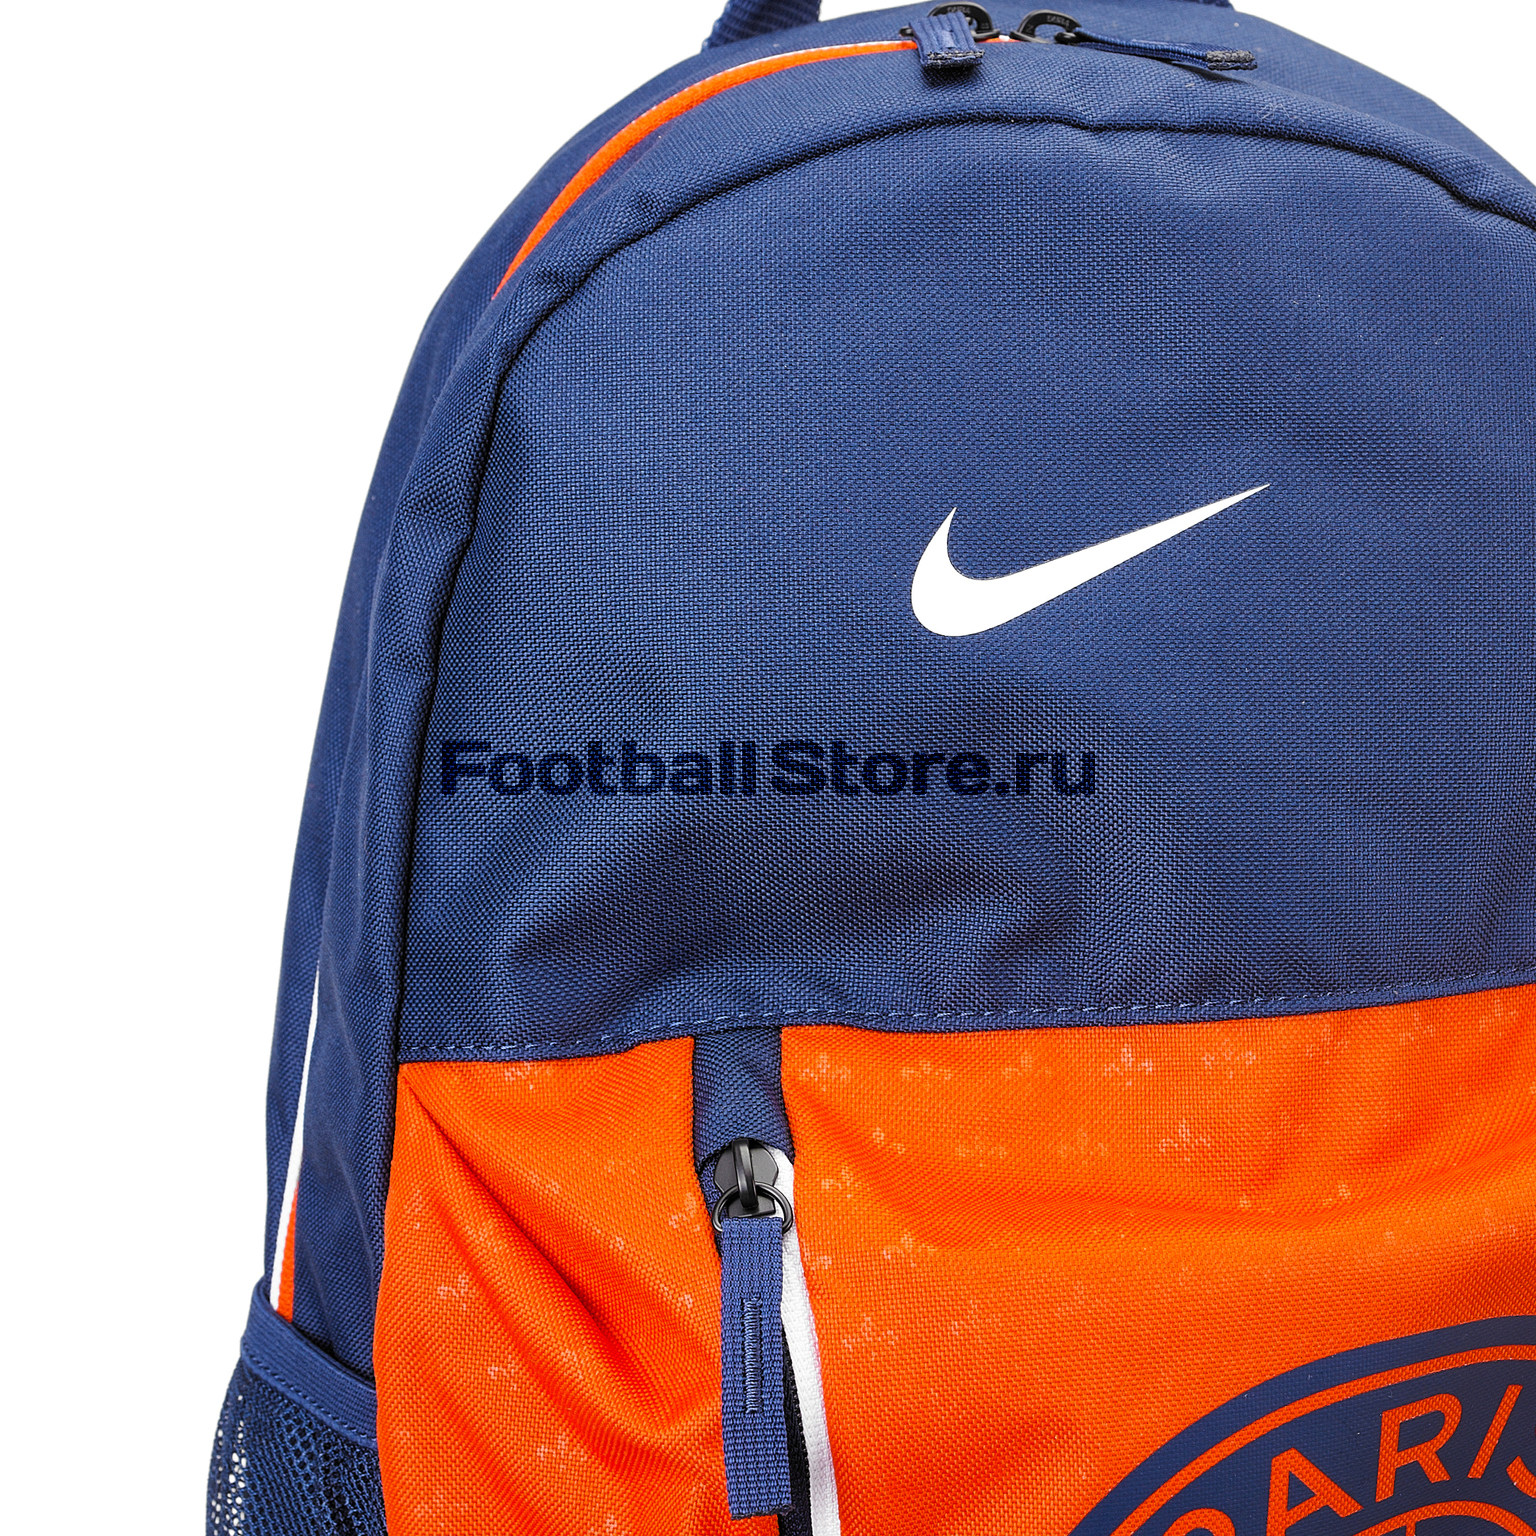 Рюкзак Nike Stadium PSG Backpack BA5526-421